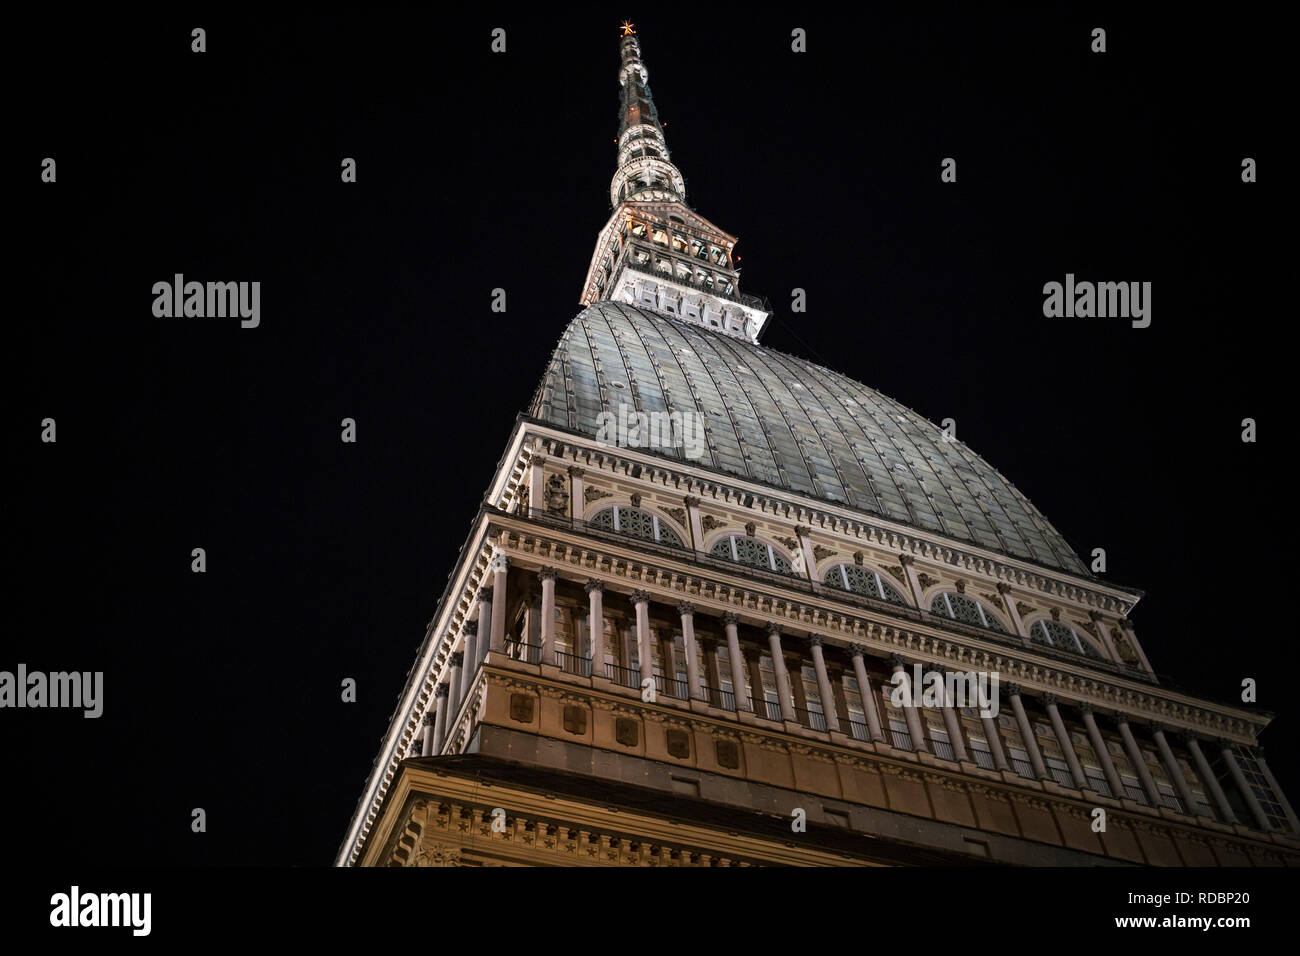 TURIN, ITALY - AUGUST 24, 2018: View of the Mole Antonelliana, major landmark in Turin, Italy. Stock Photo